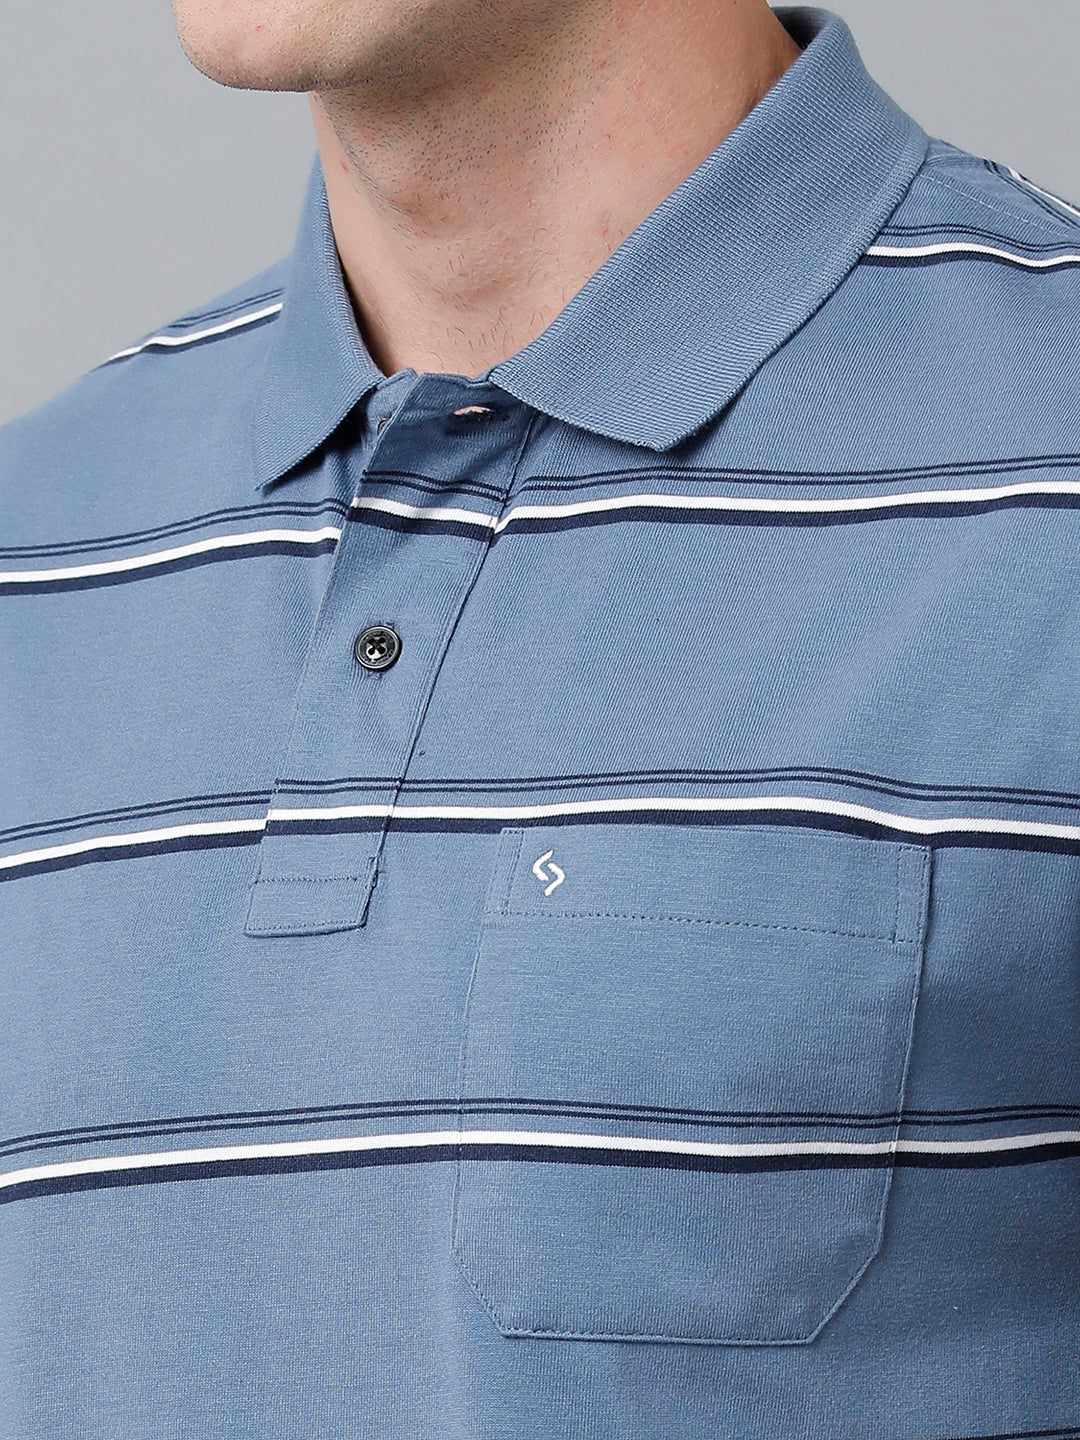 Classic Polo Men's Cotton Blend Half Sleeve Striped Authentic Fit Polo Neck Blue Color T-Shirt | Avon - 517 A